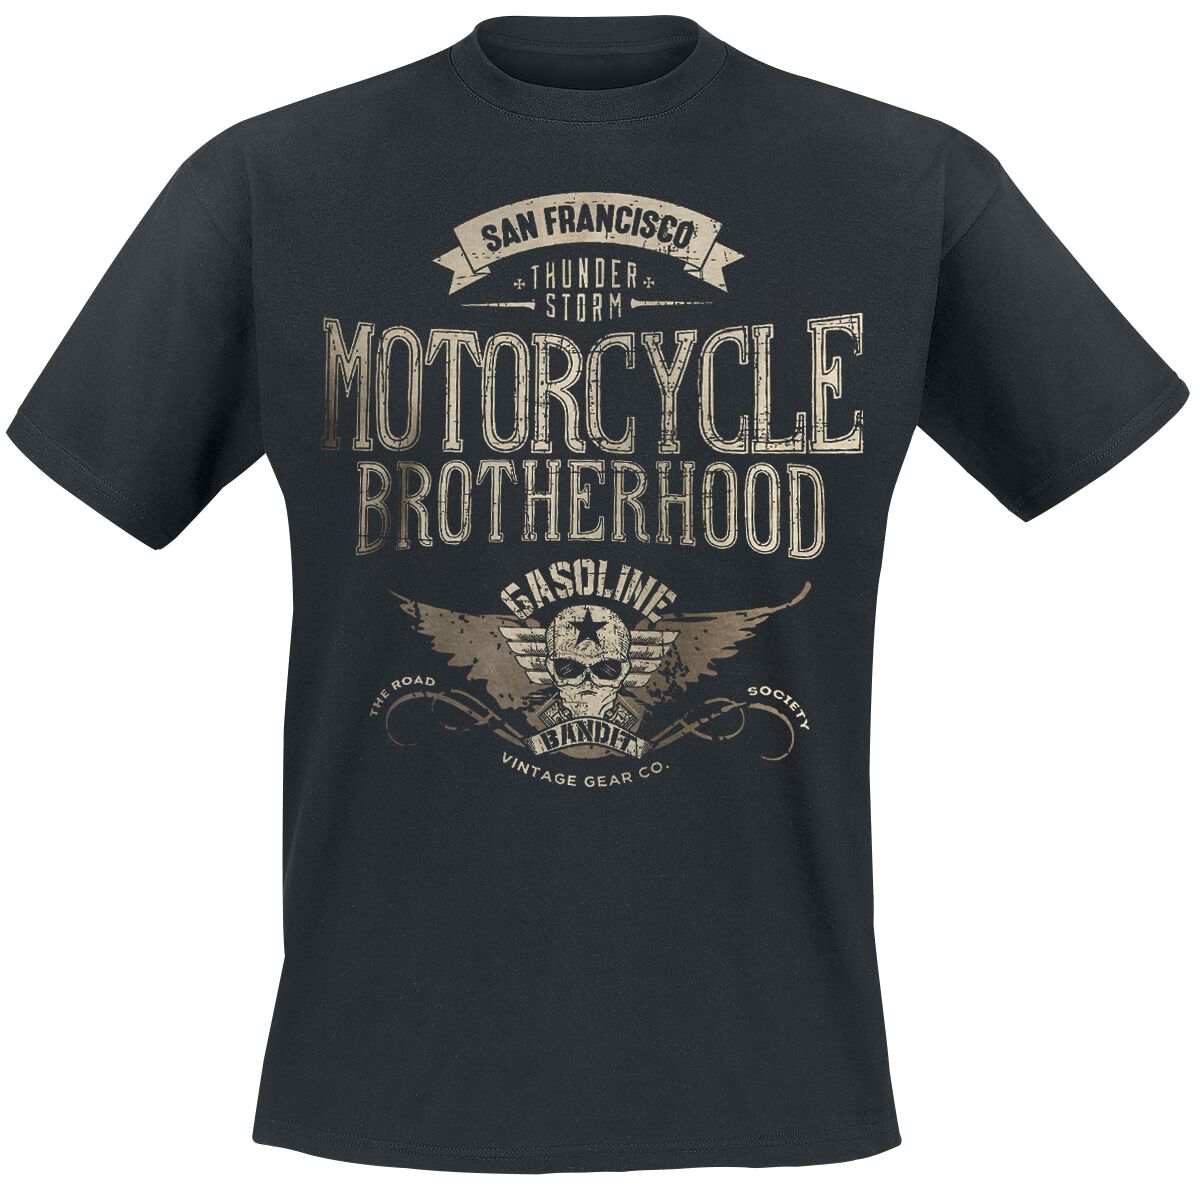 Gasoline Bandit Motorcycle Brotherhood T-Shirt schwarz in L